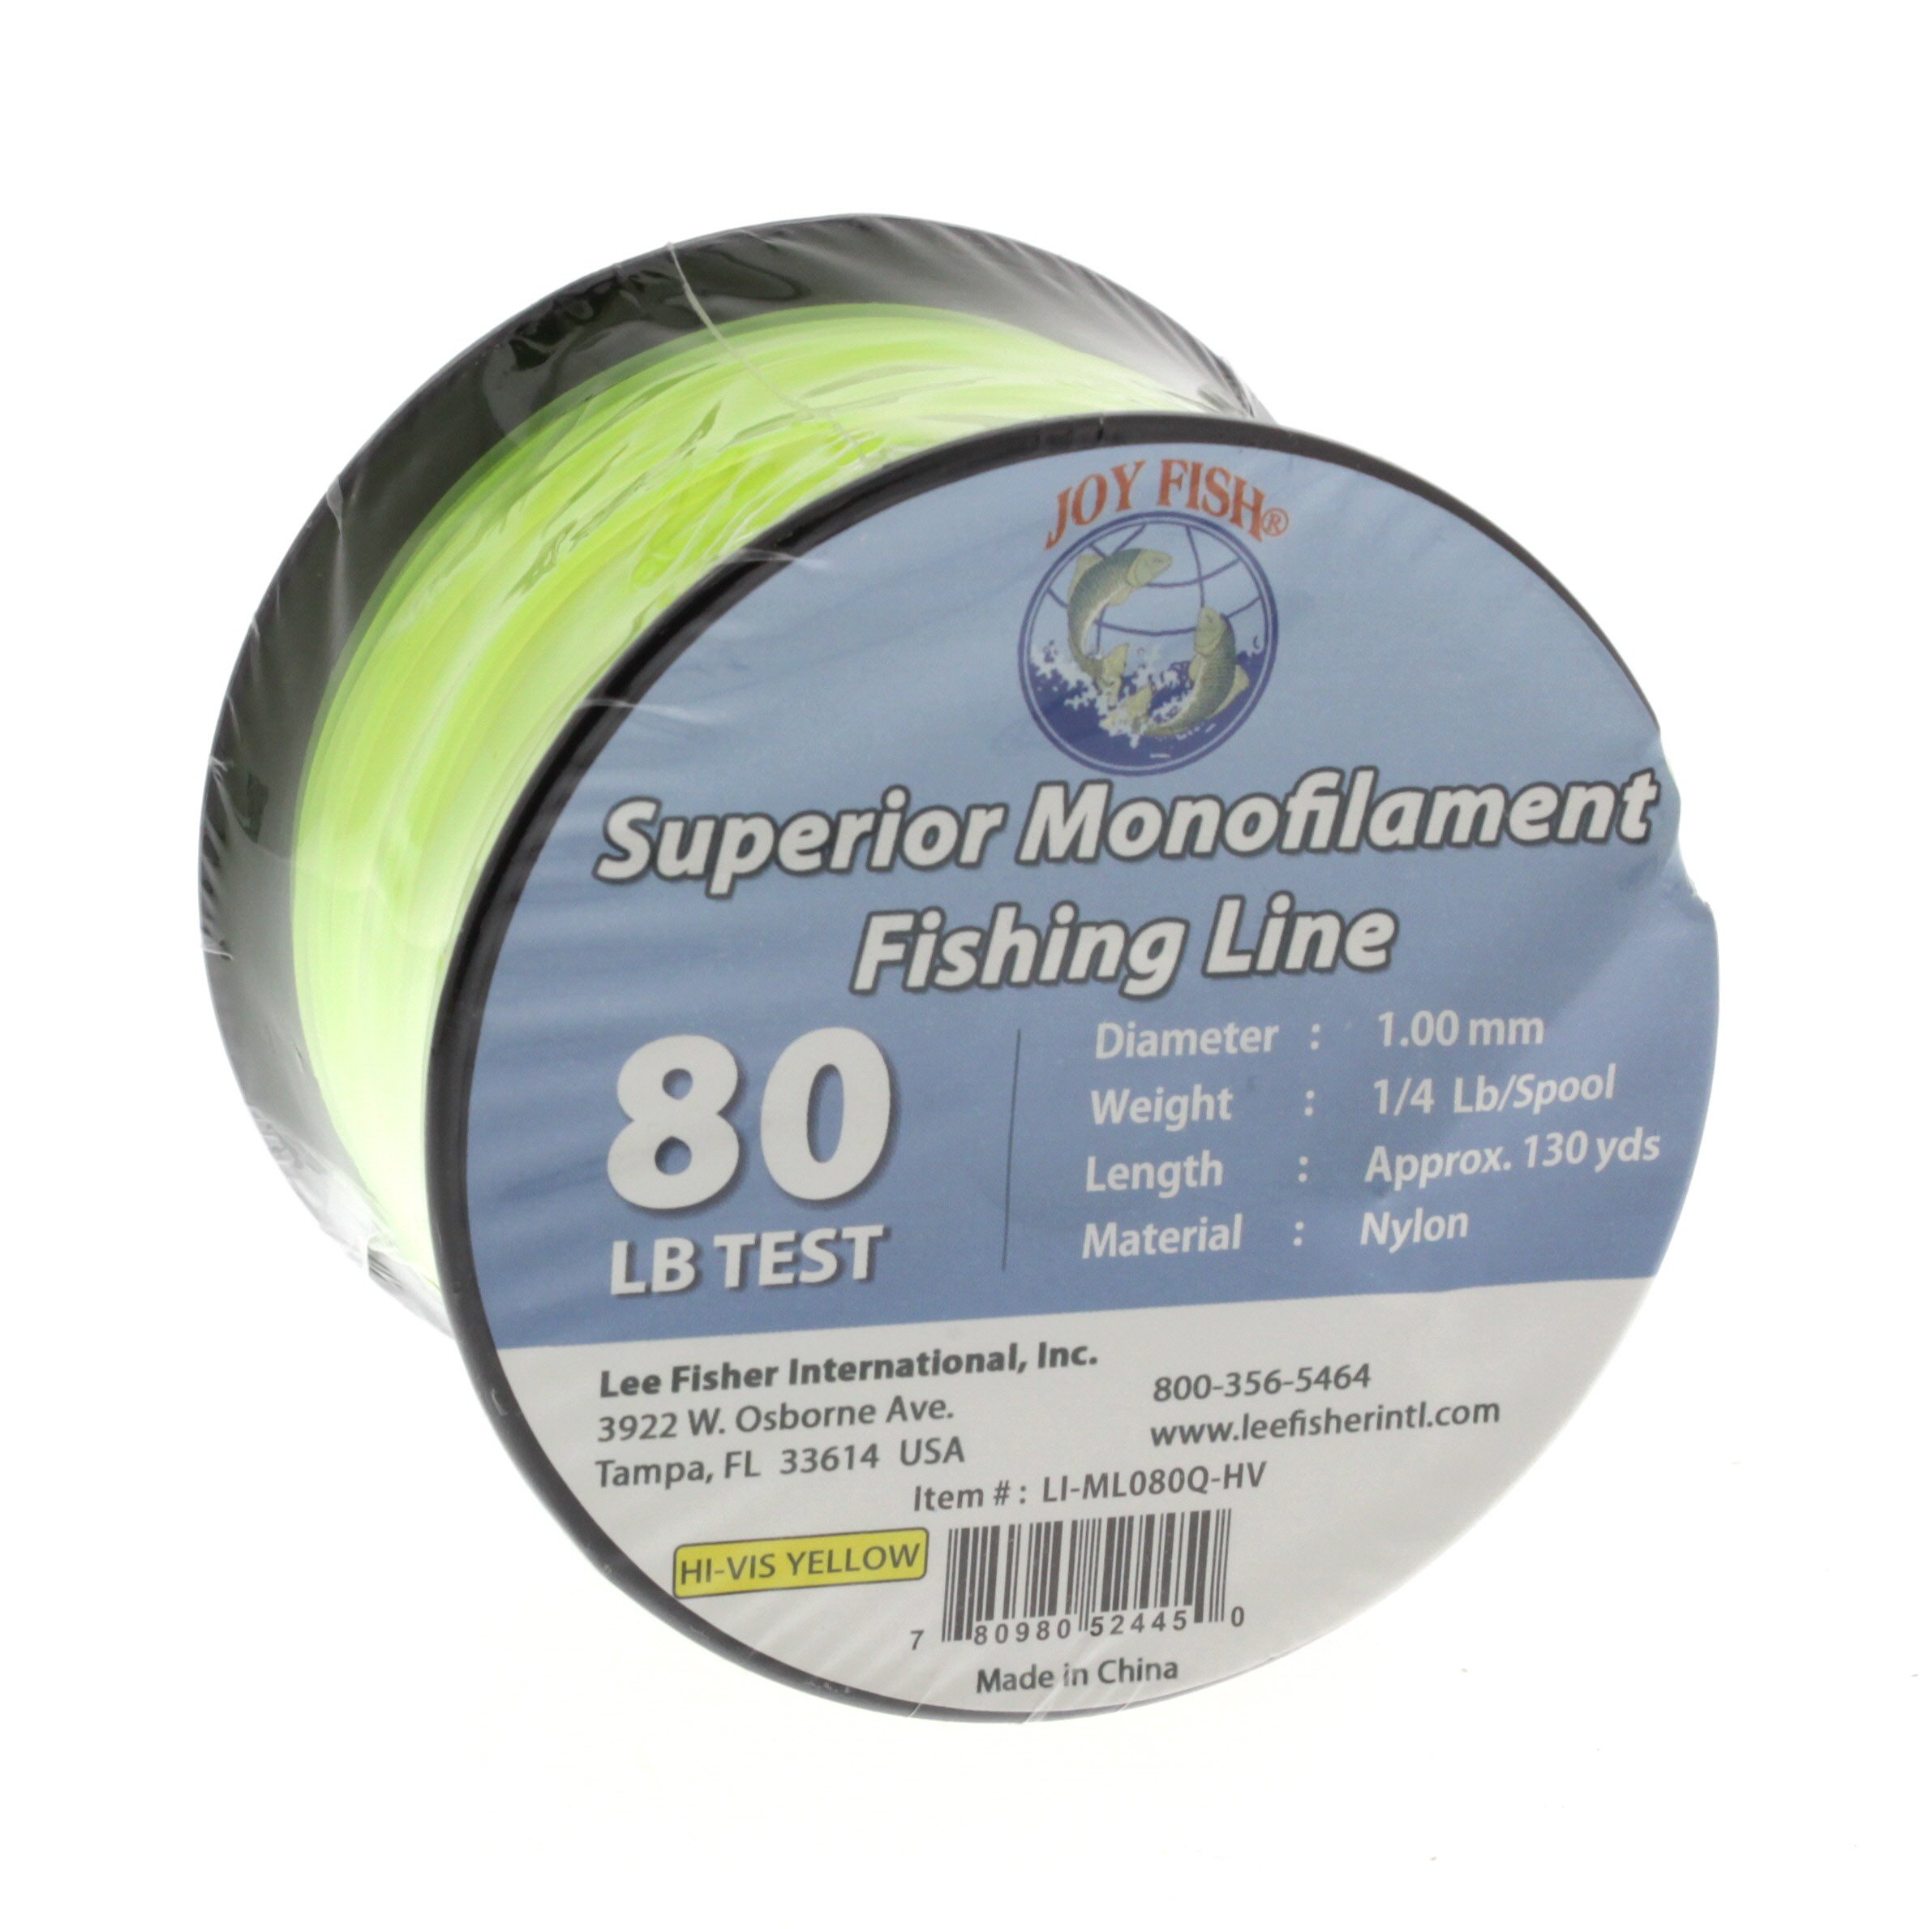 Lee Fisher Superior Monofilament Yellow Fishing Line 80 Lb - Shop Fishing  at H-E-B